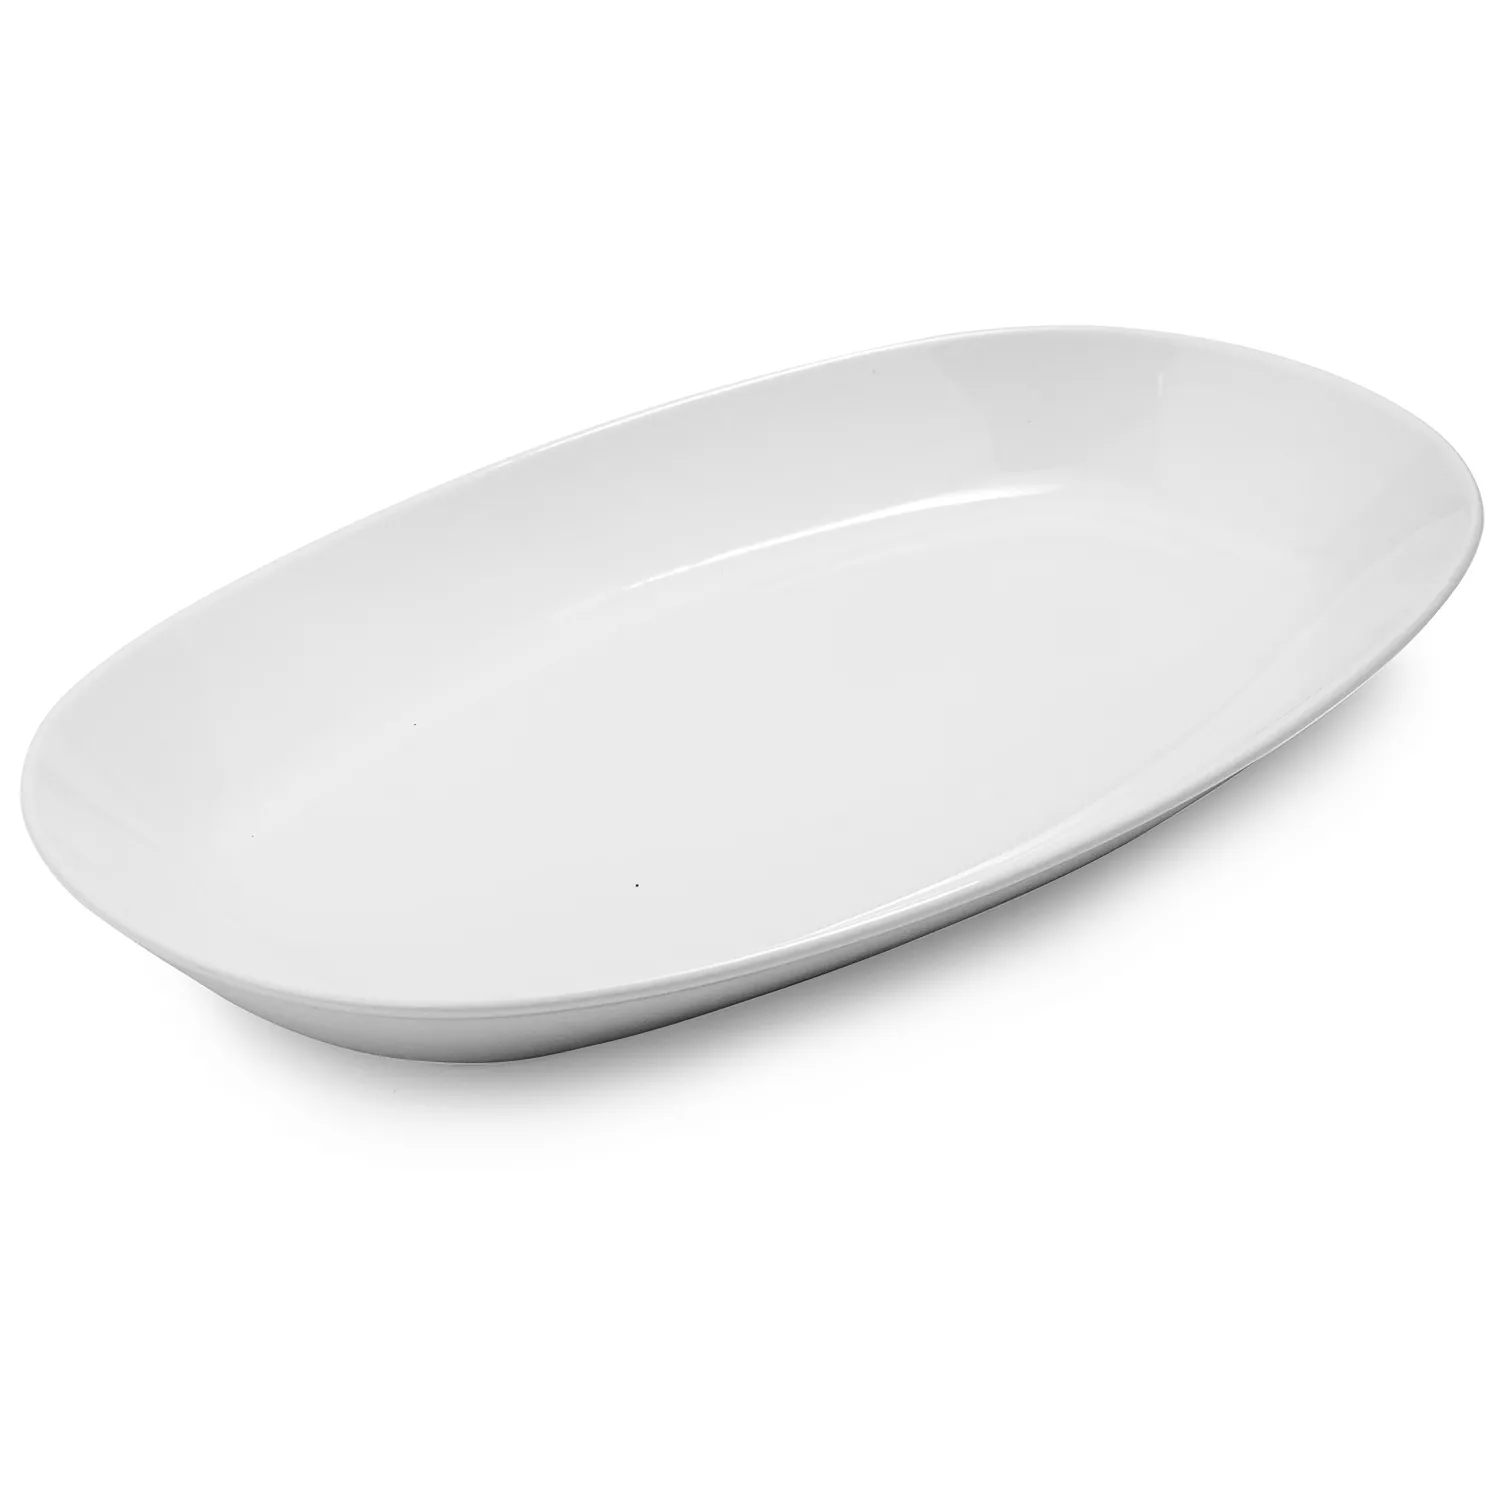 KitchenAid Can Opener Classic White 21 cm